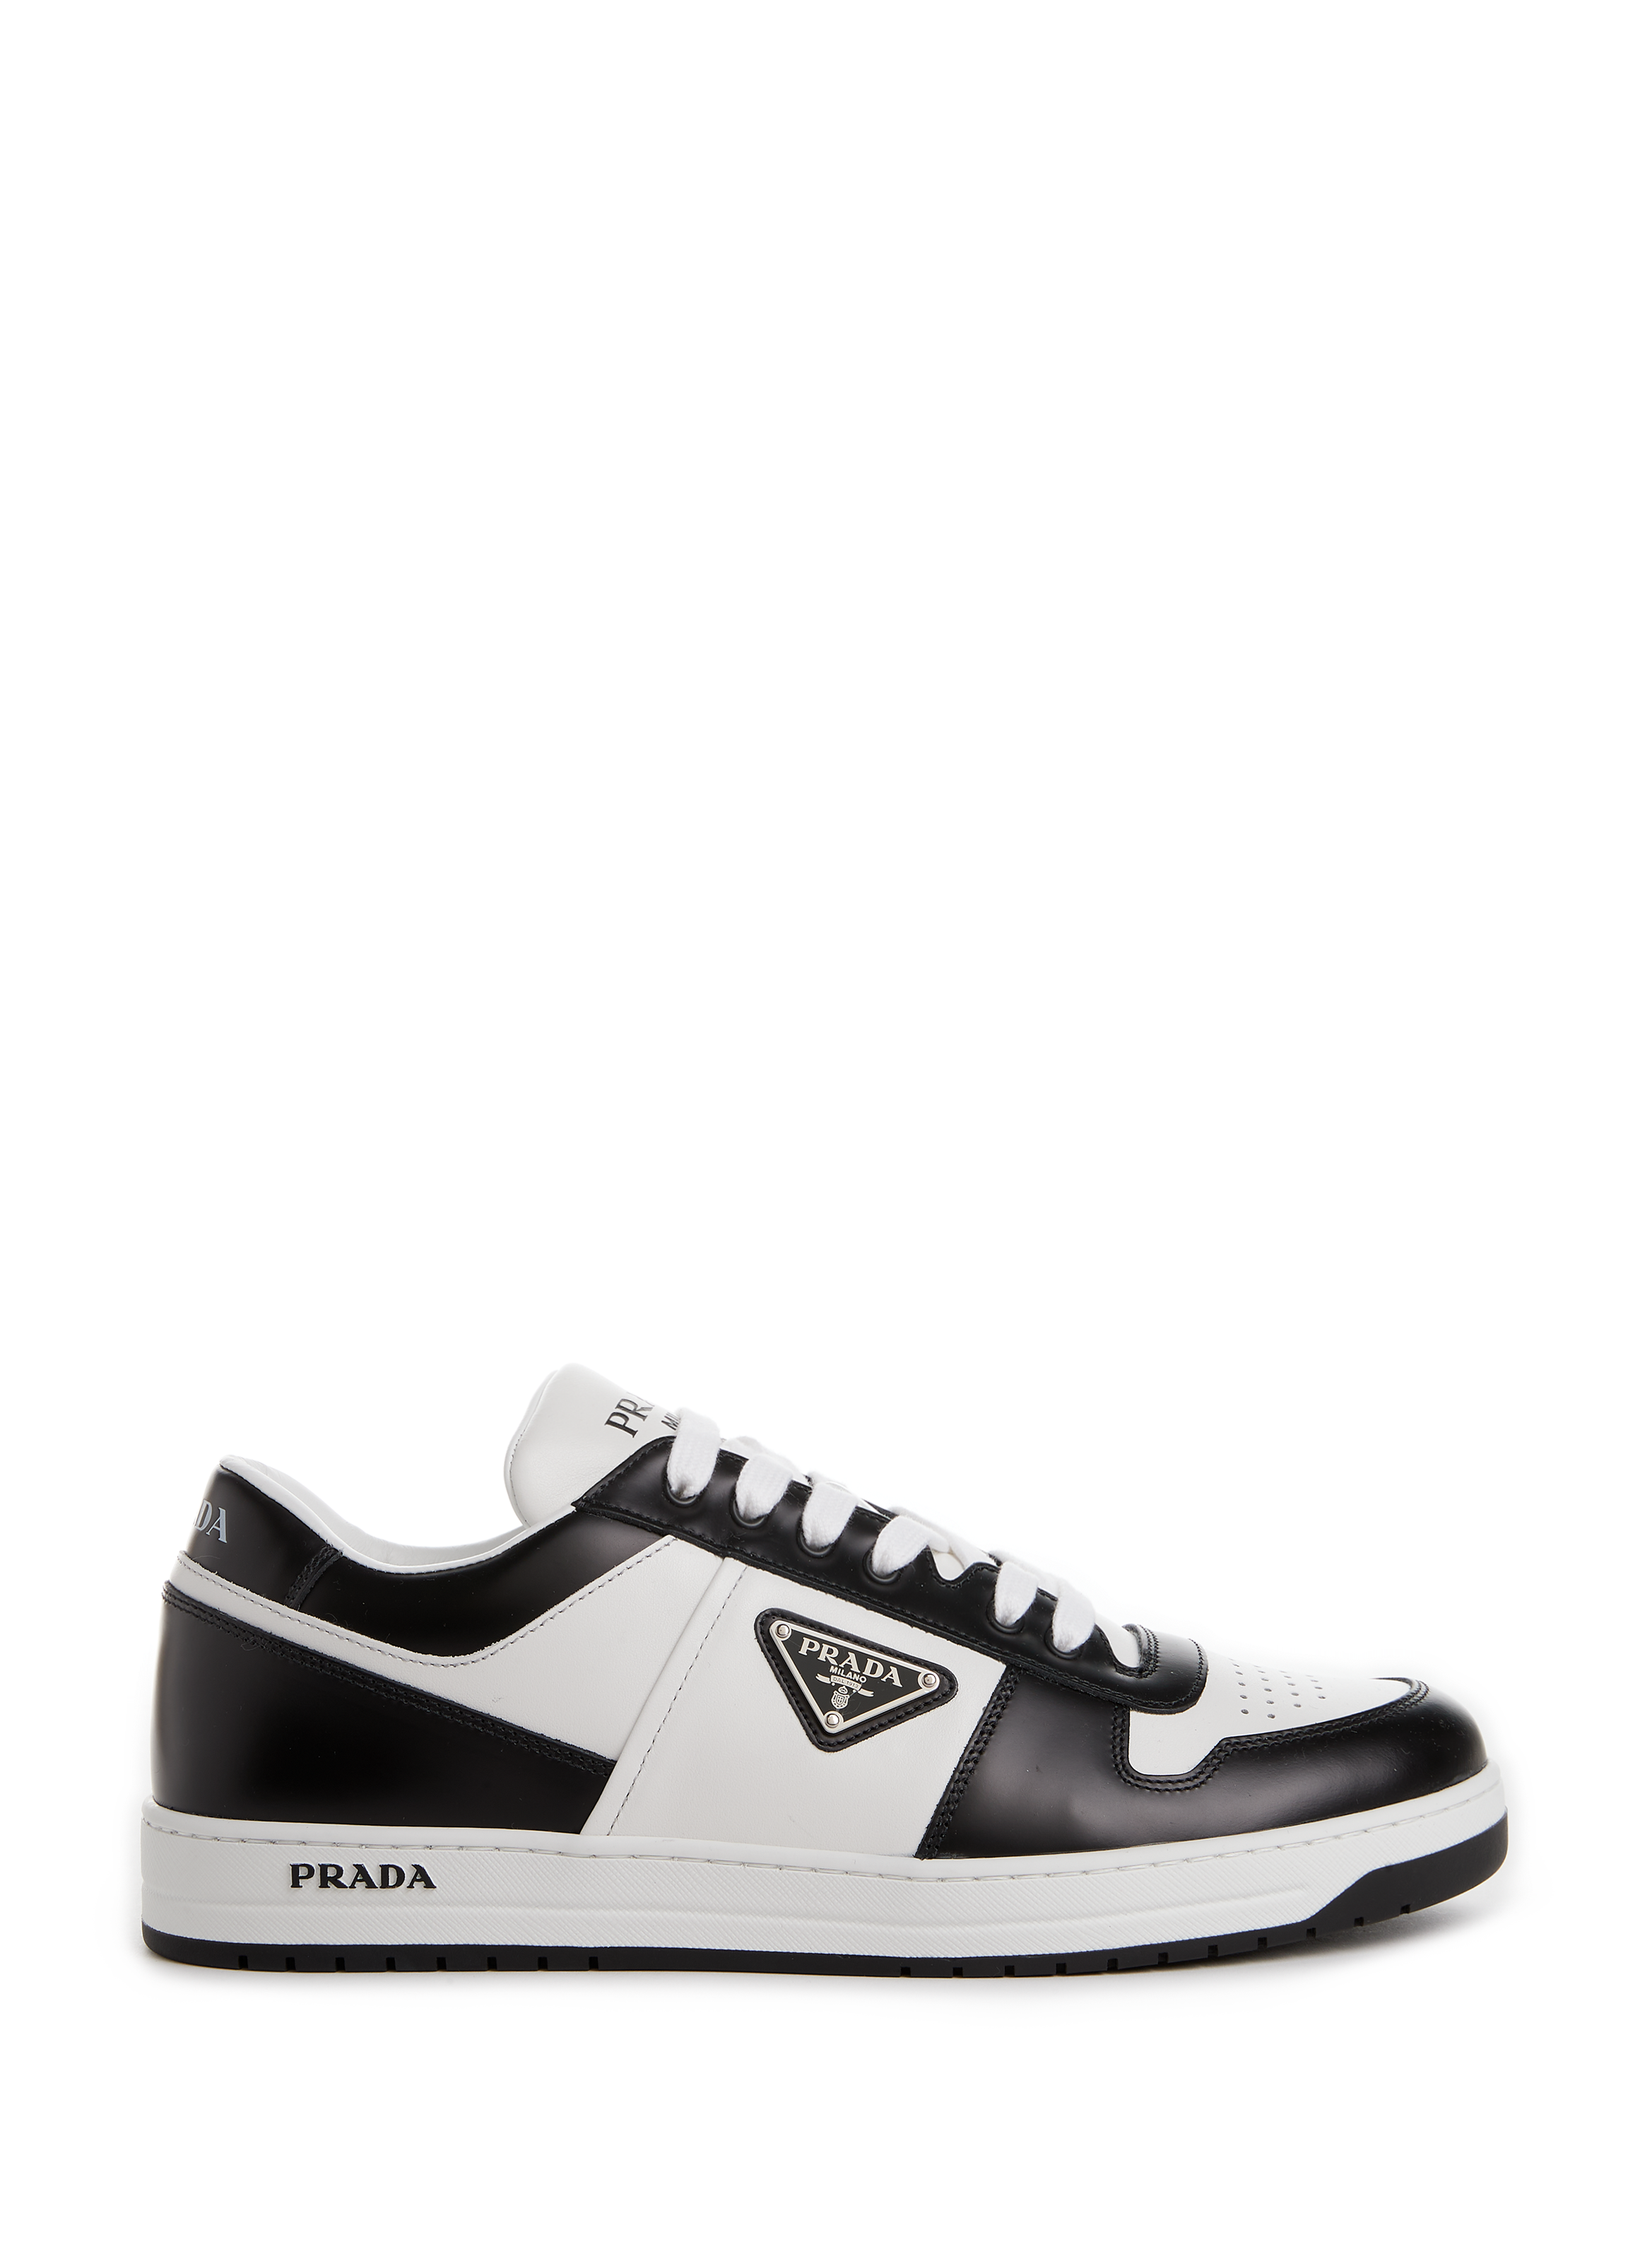 Prada Casual Shoes For Men #704676 $107.00, Wholesale Replica Prada Casual  Shoes #prada #men #shoes #sneake… | Prada men shoes, Gucci men shoes, Mens  shoes sneakers